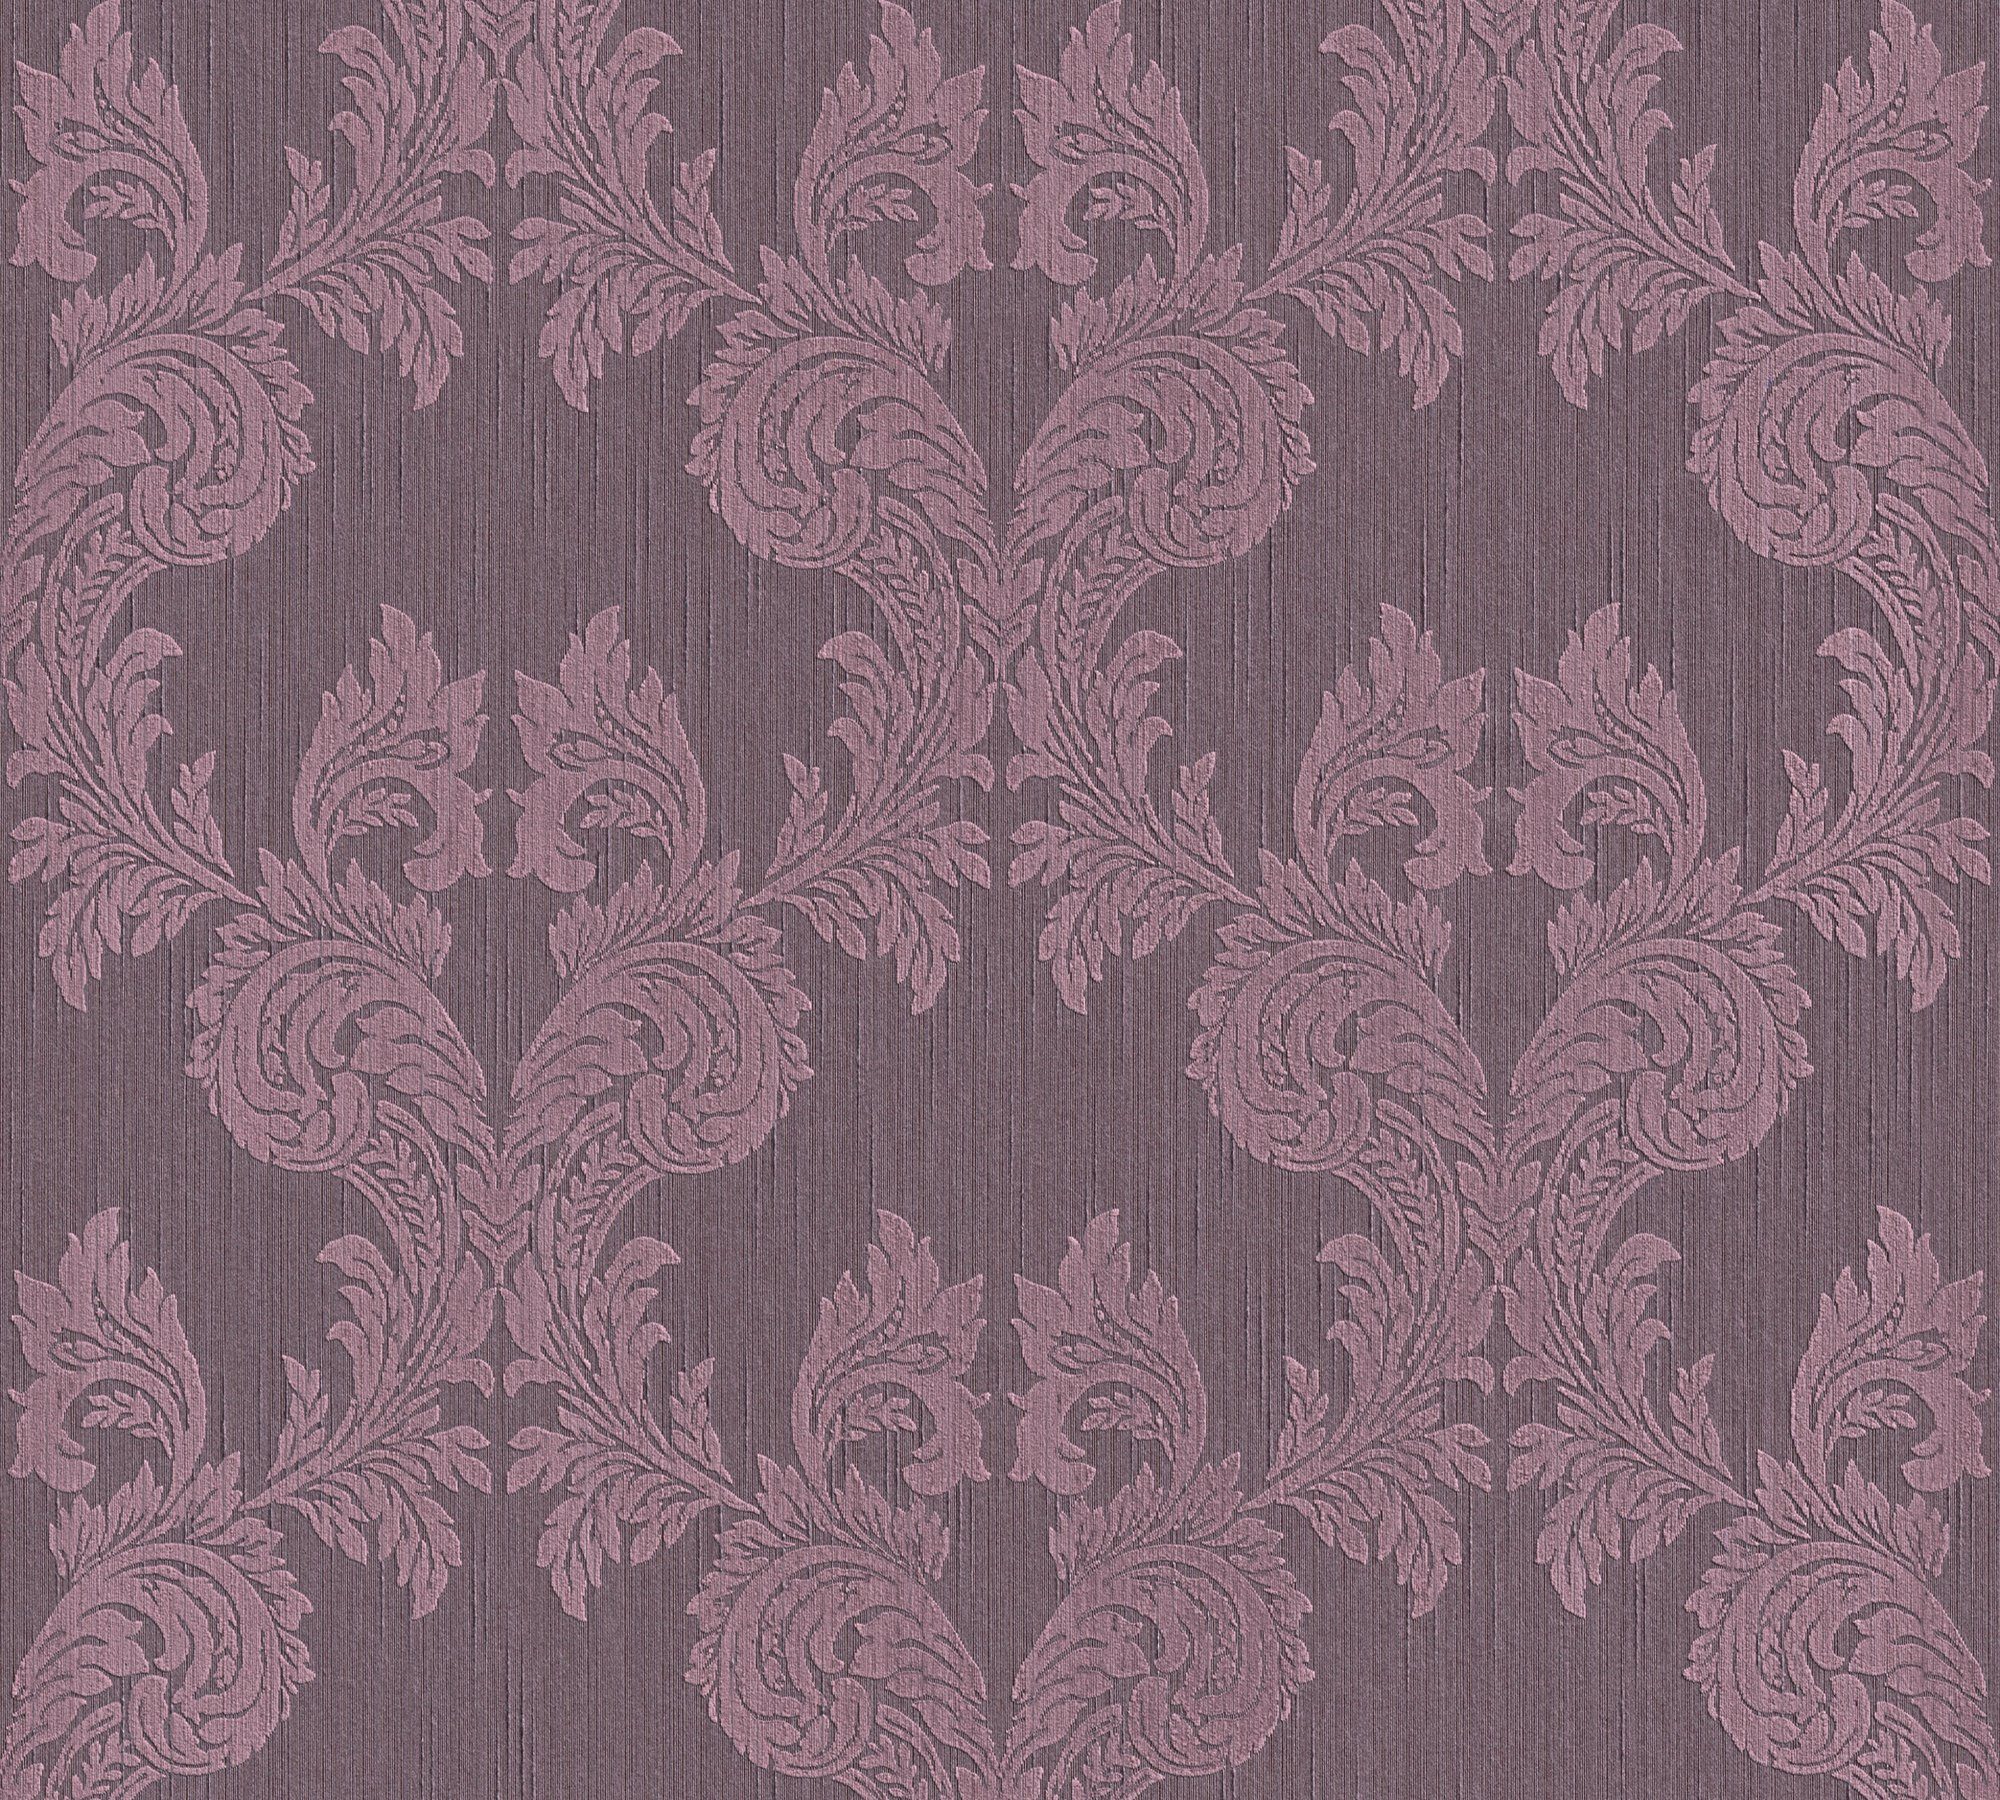 Création Tapete Barock, A.S. Textiltapete floral, Barock Architects violett Paper Tessuto, samtig,